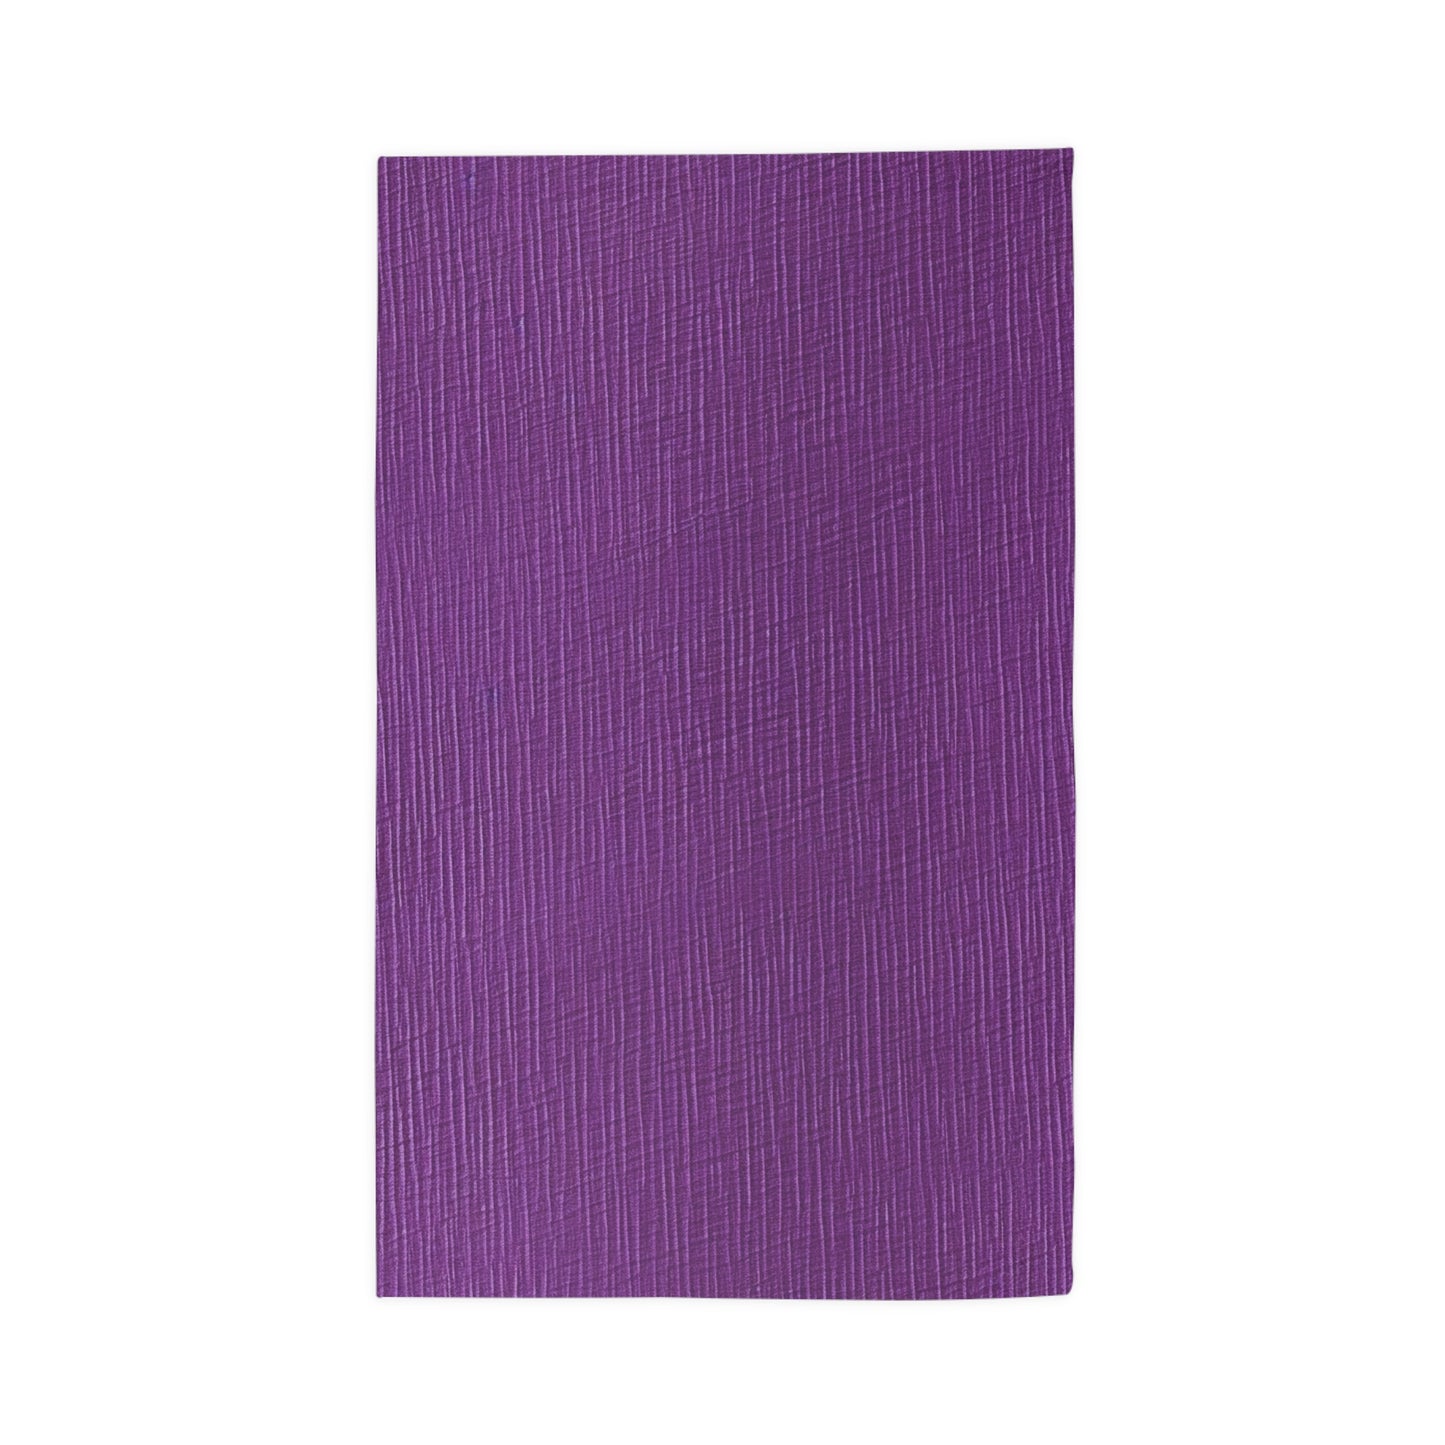 Violet/Plum/Purple: Denim-Inspired Luxurious Fabric - Dobby Rug